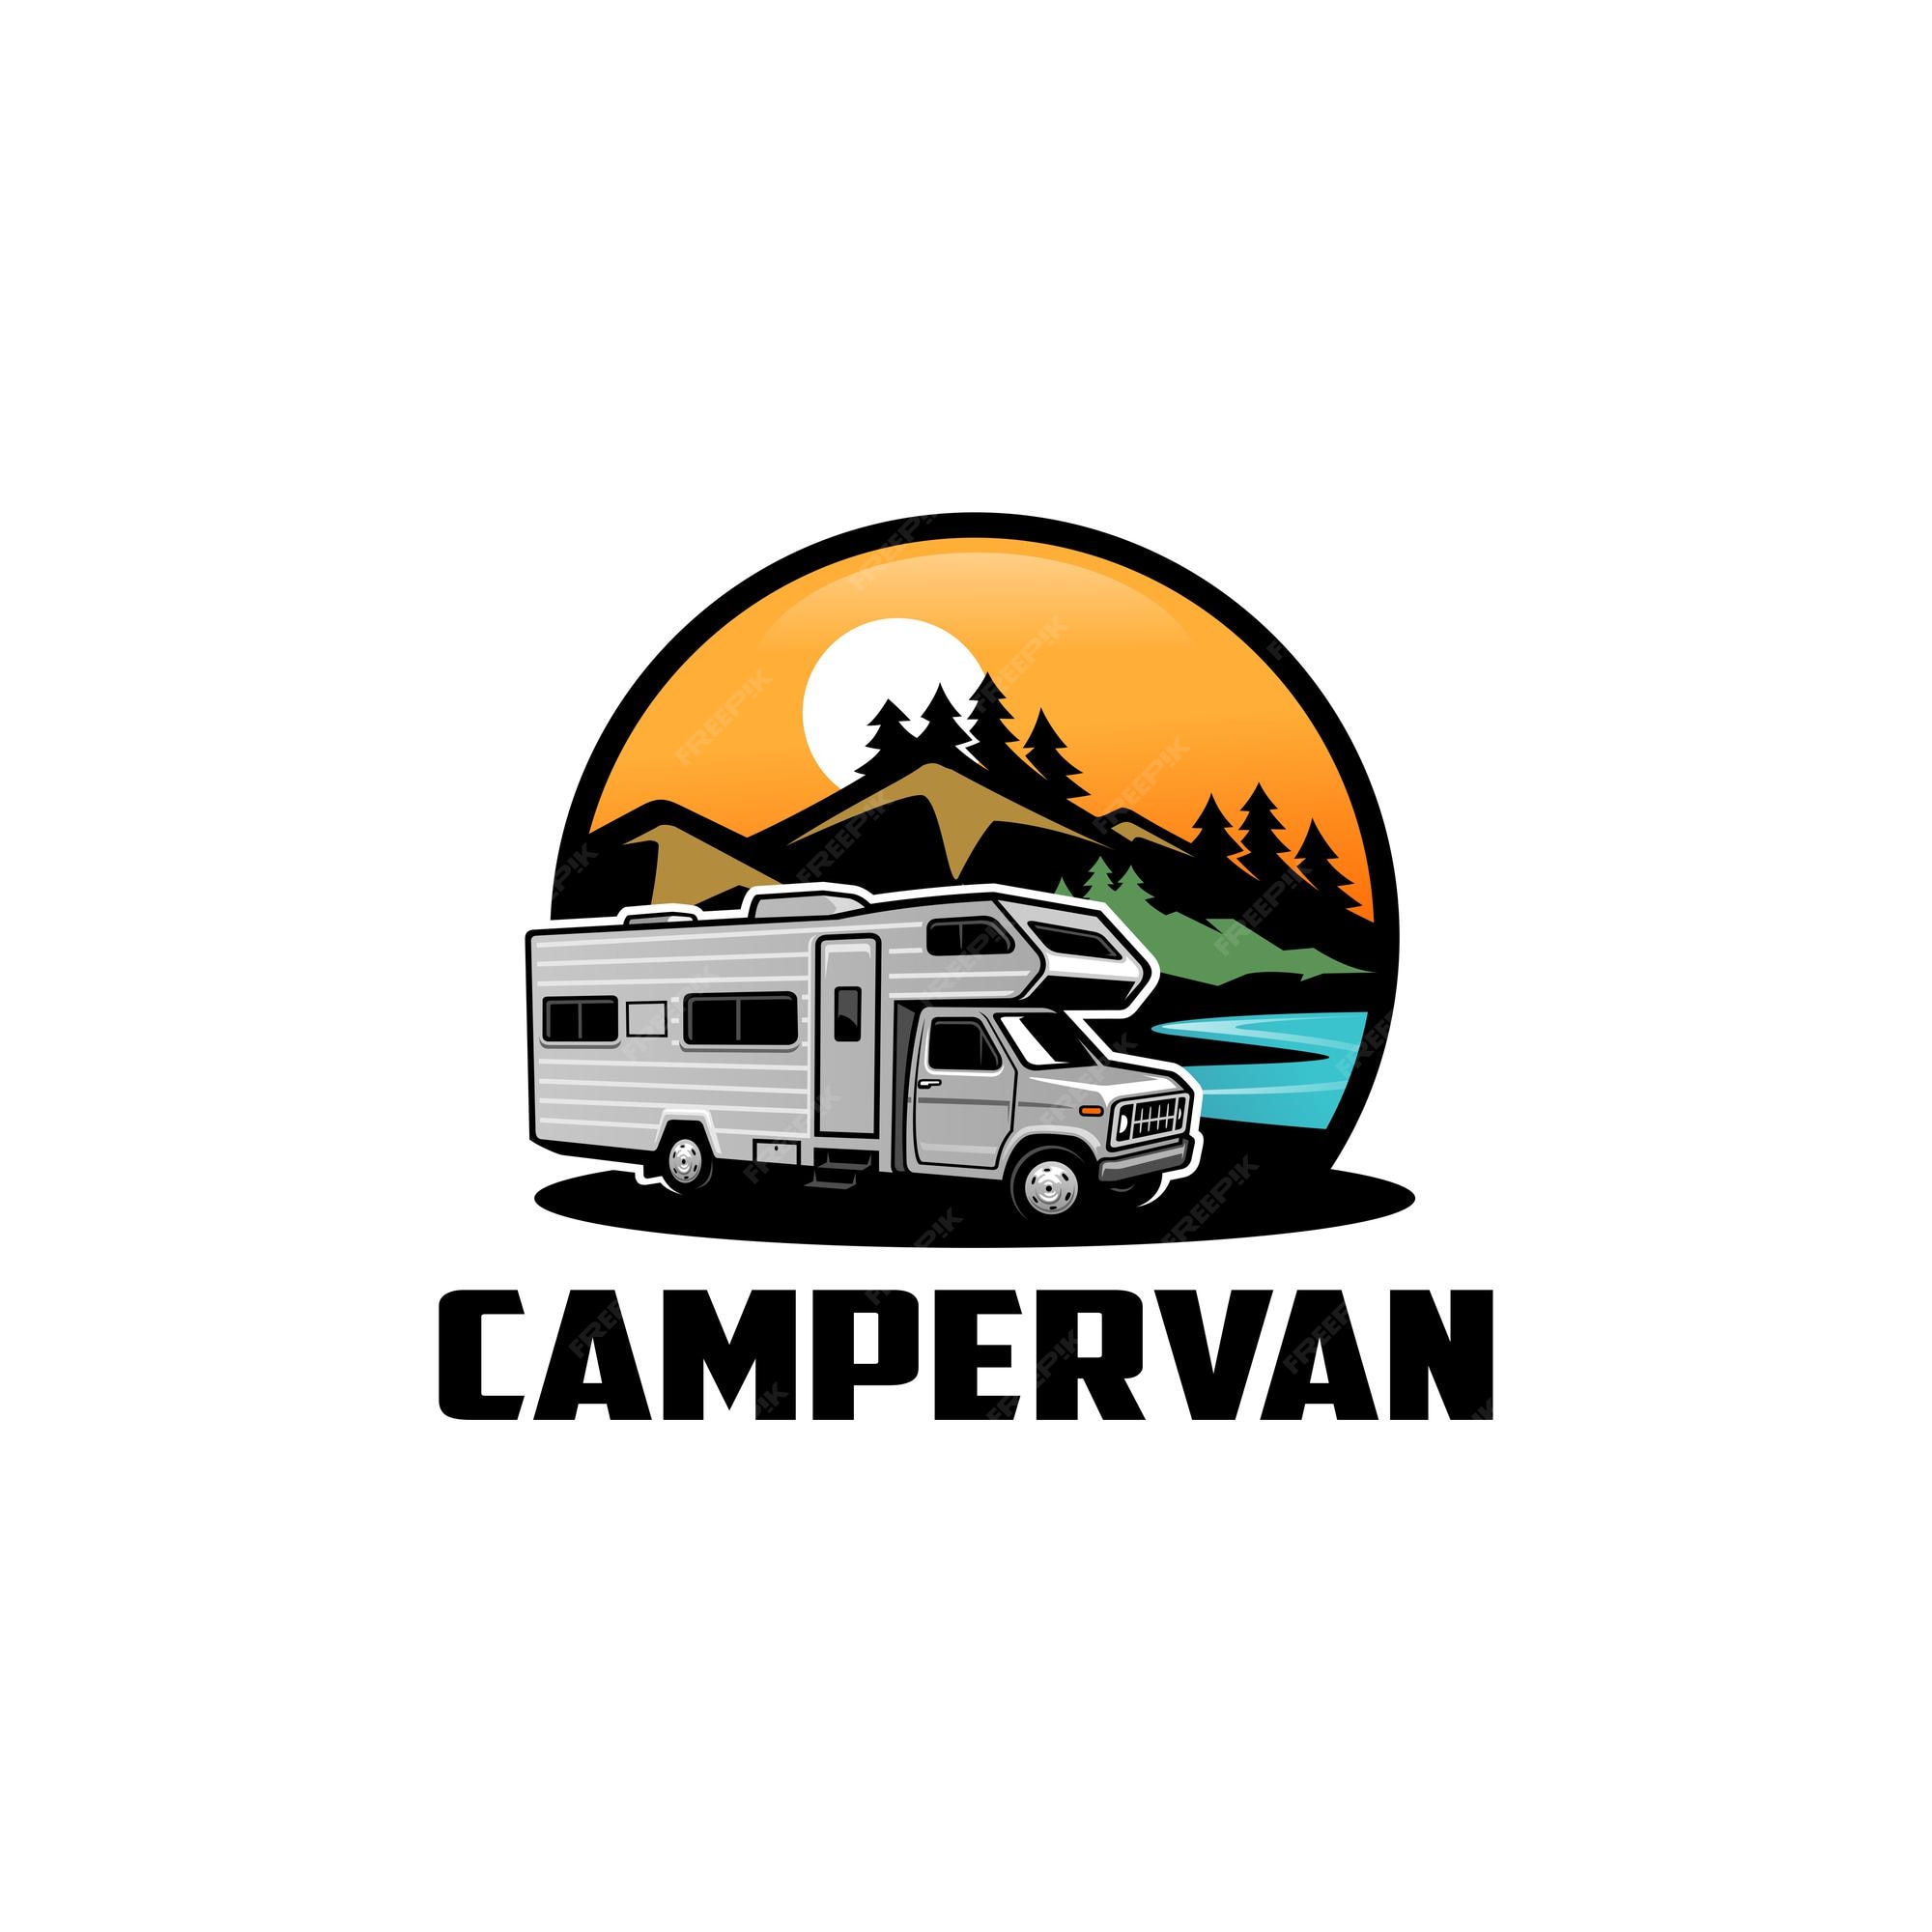 Premium Vector | Camper van rv motor home logo and illustration vector ...